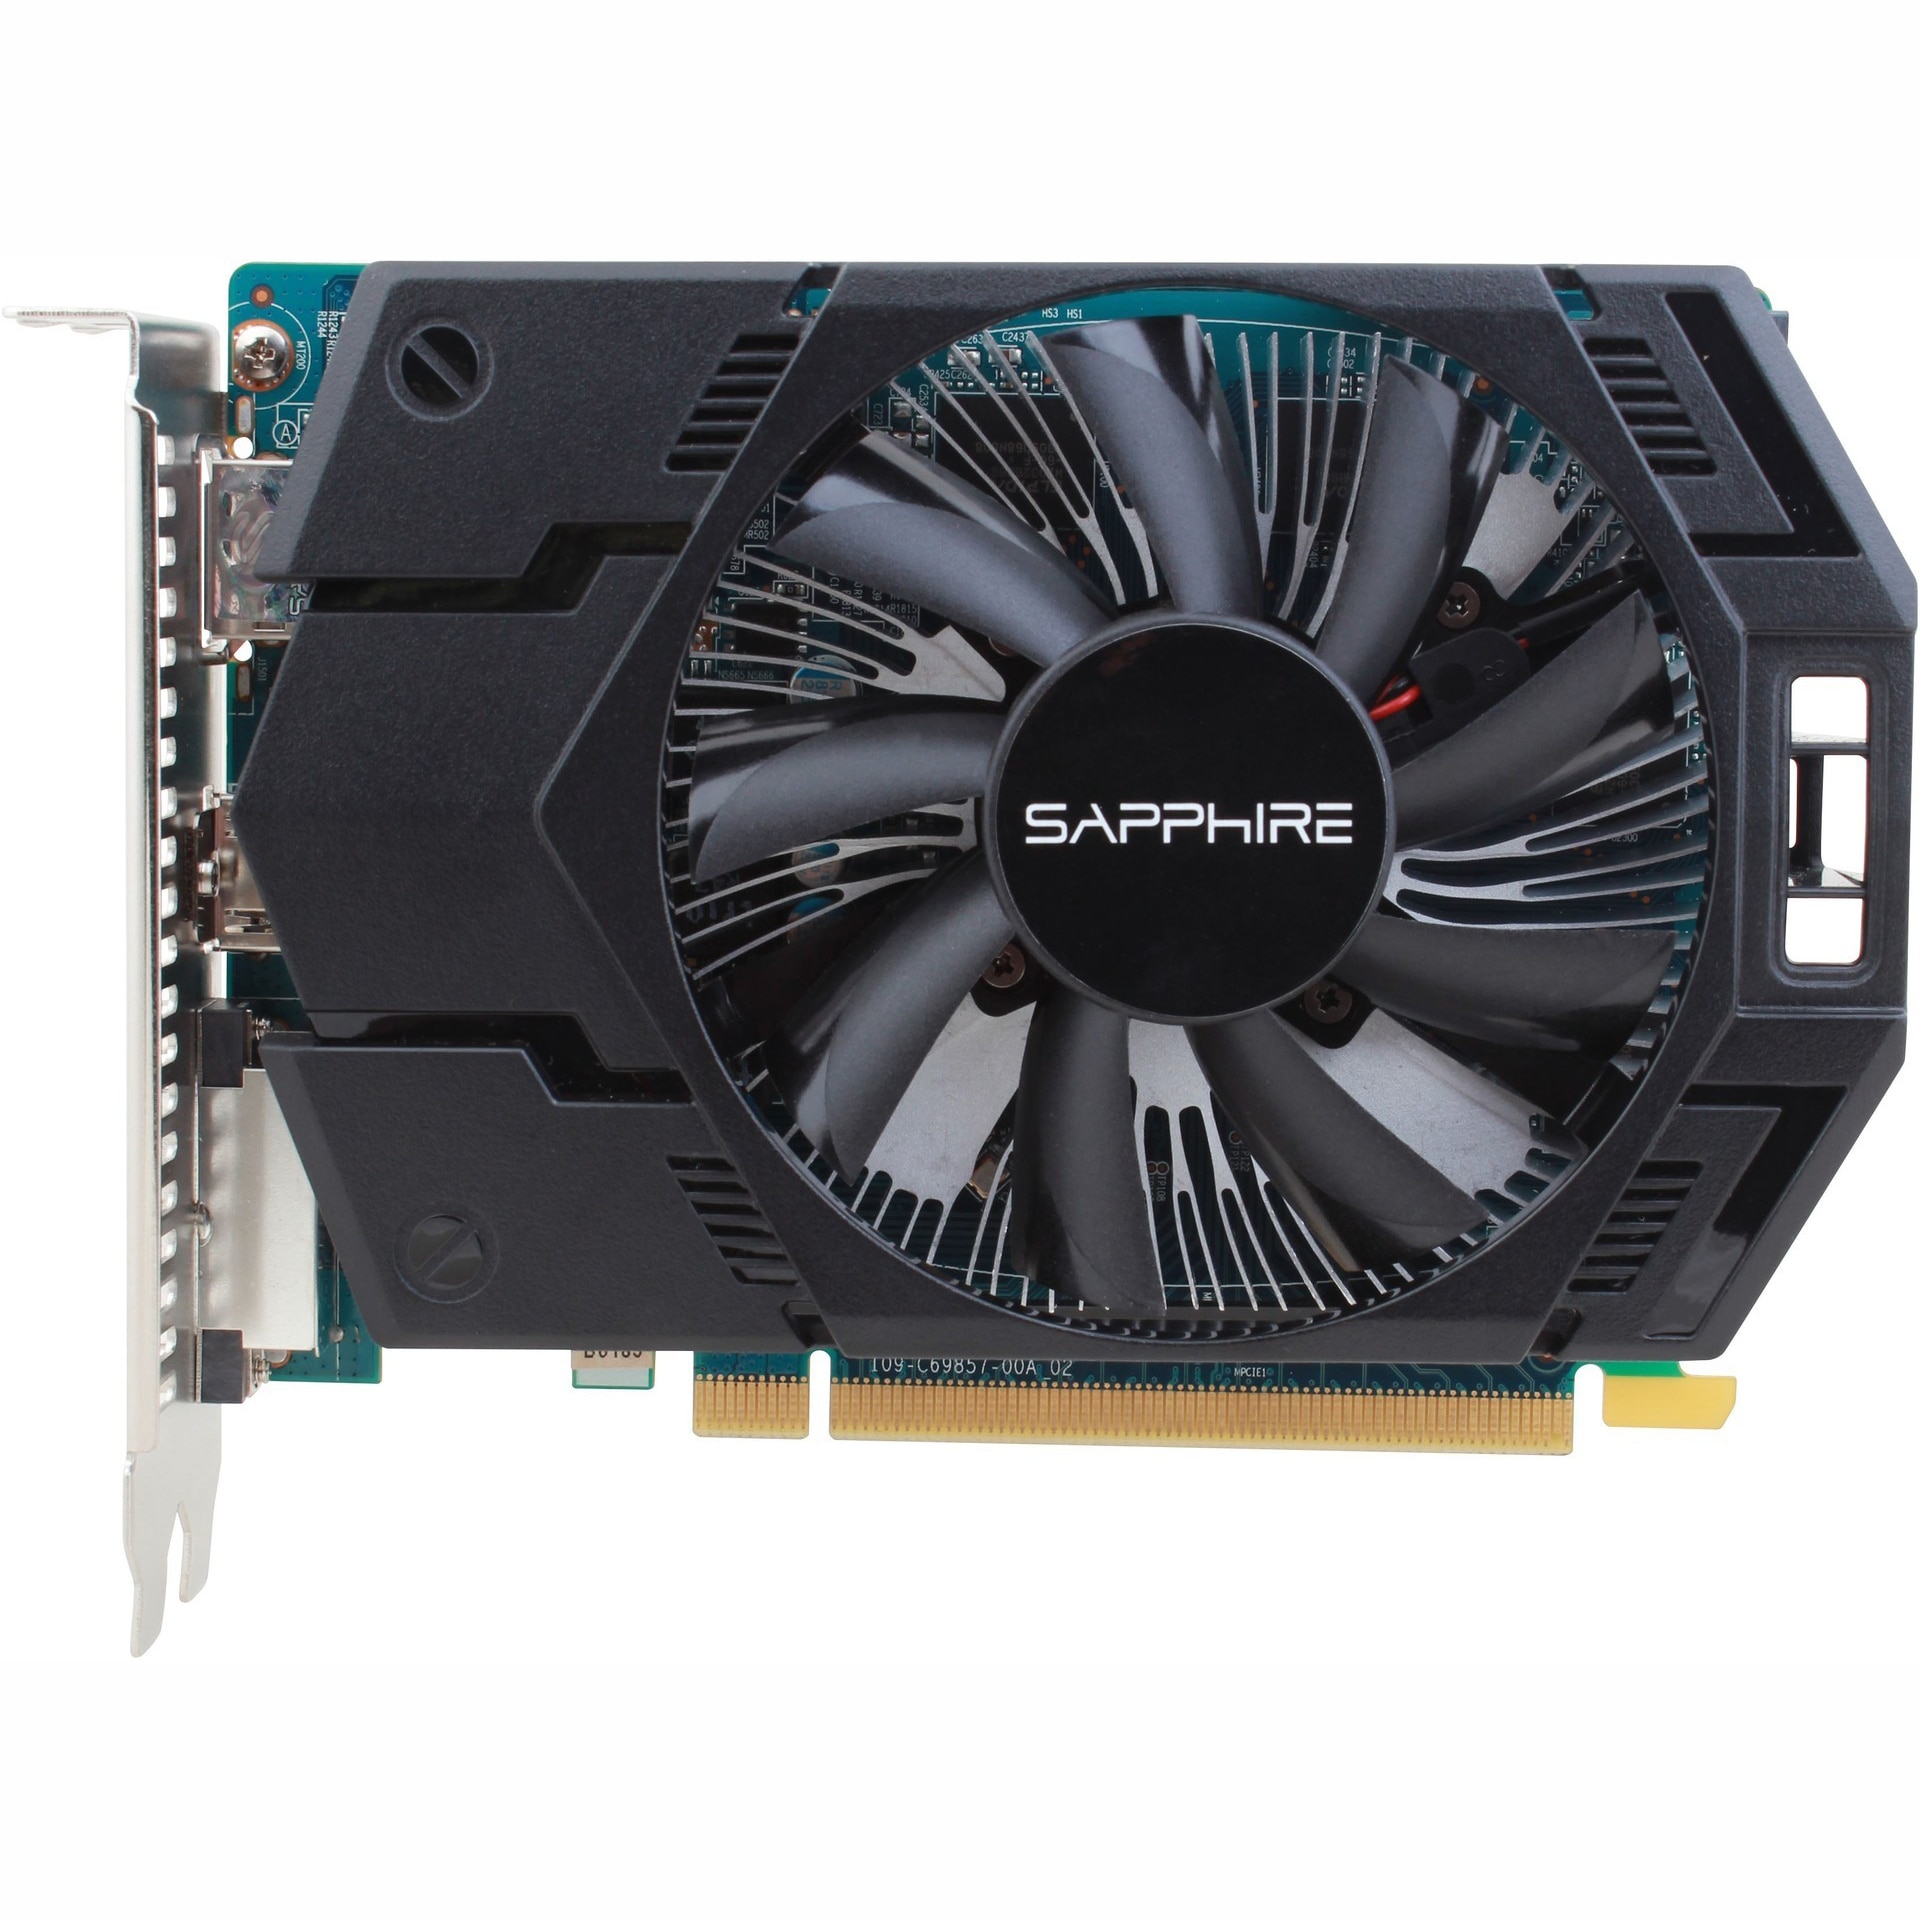 SAPPHIRE AMD Radeon R7 250X DDR5 1GB